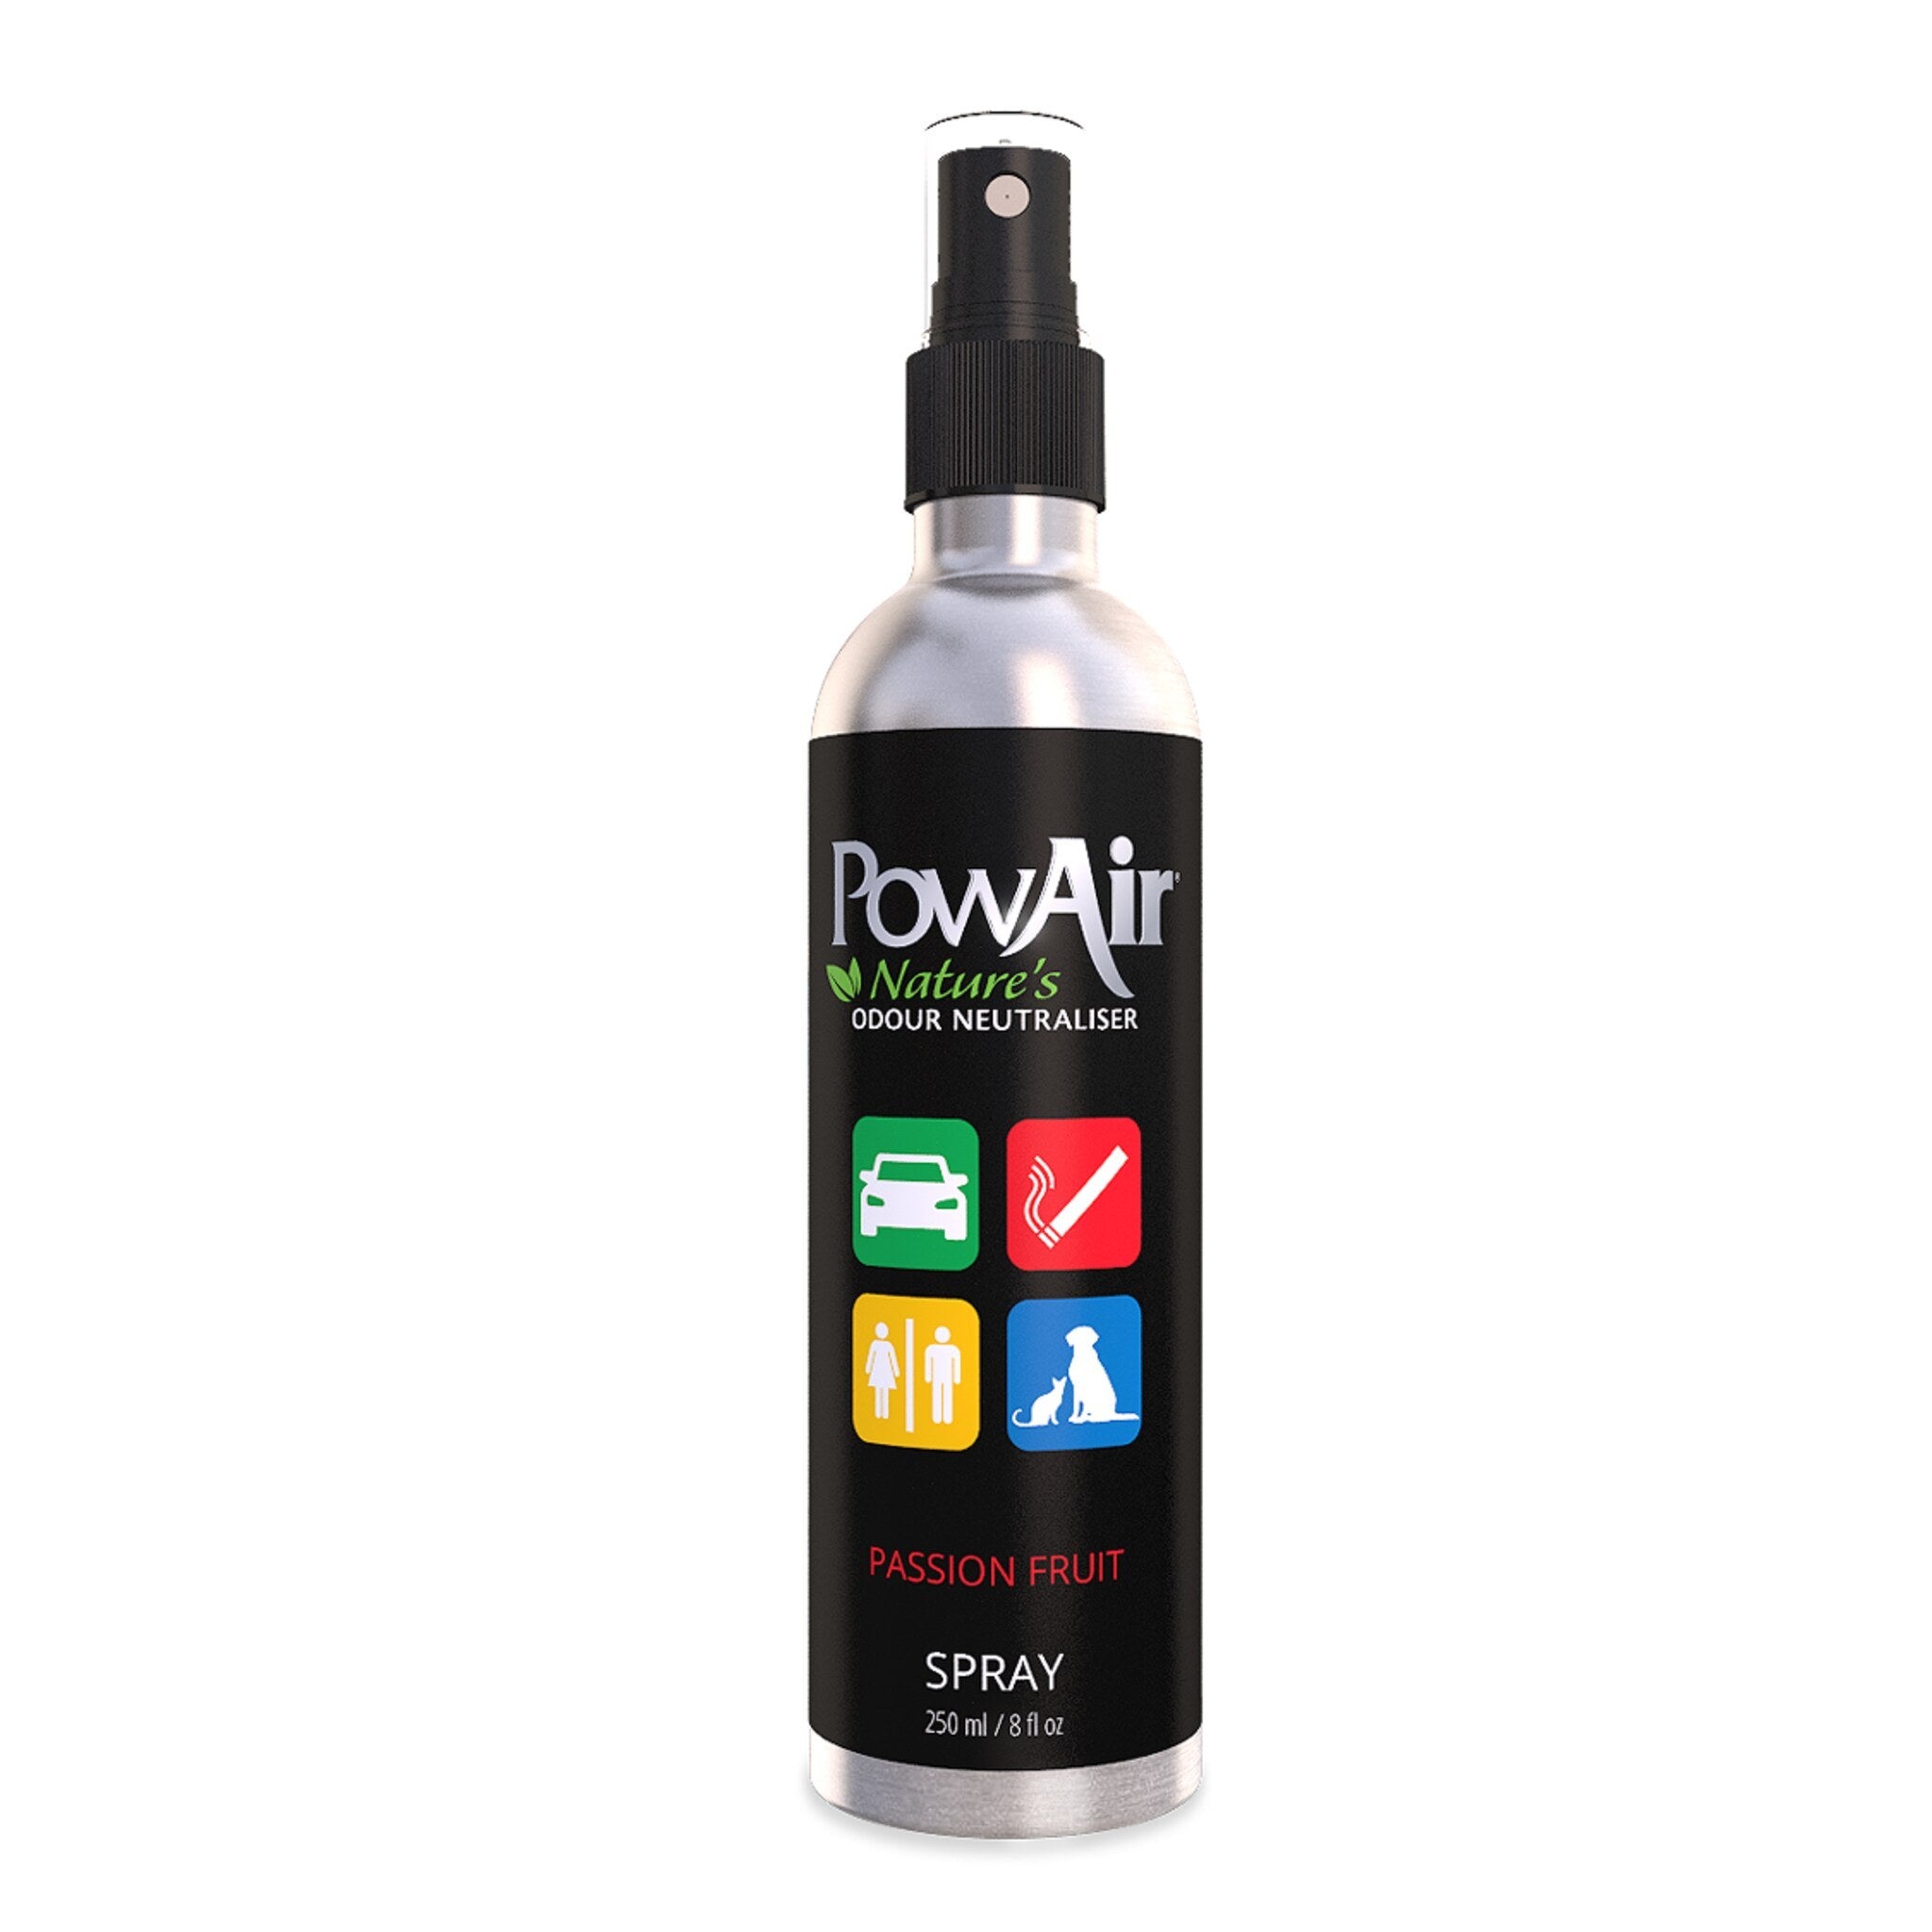 Pow Air Nature's Odour Neutralizer Passion Fruit Spray 250 ml